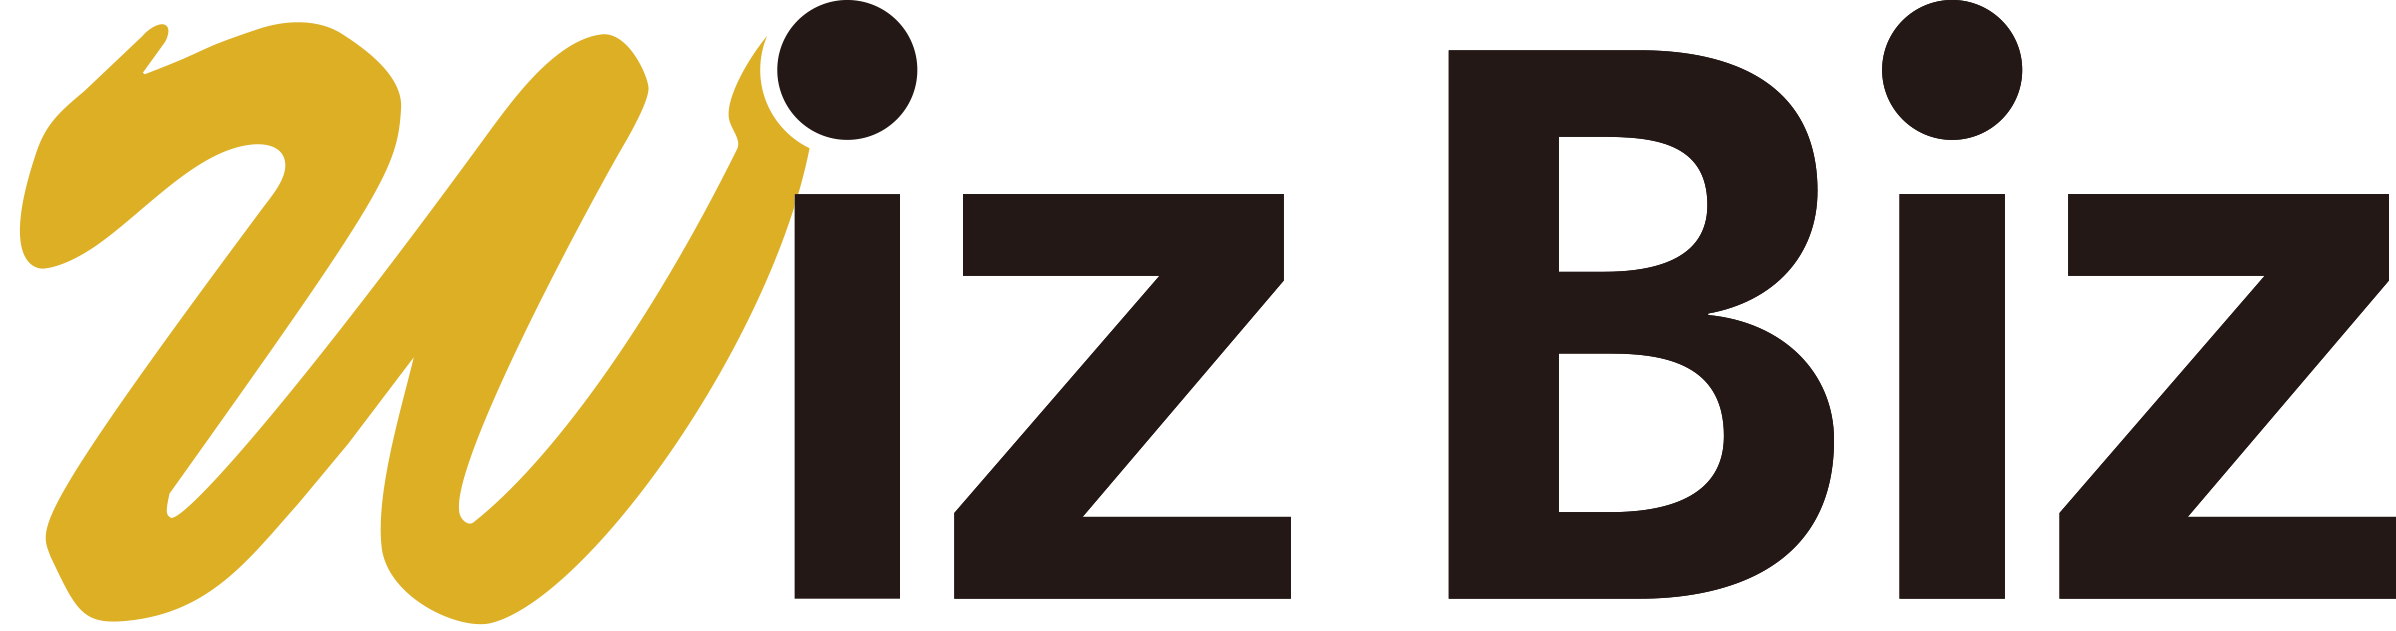 WizBiz株式会社 | すべての企業経営を応援する